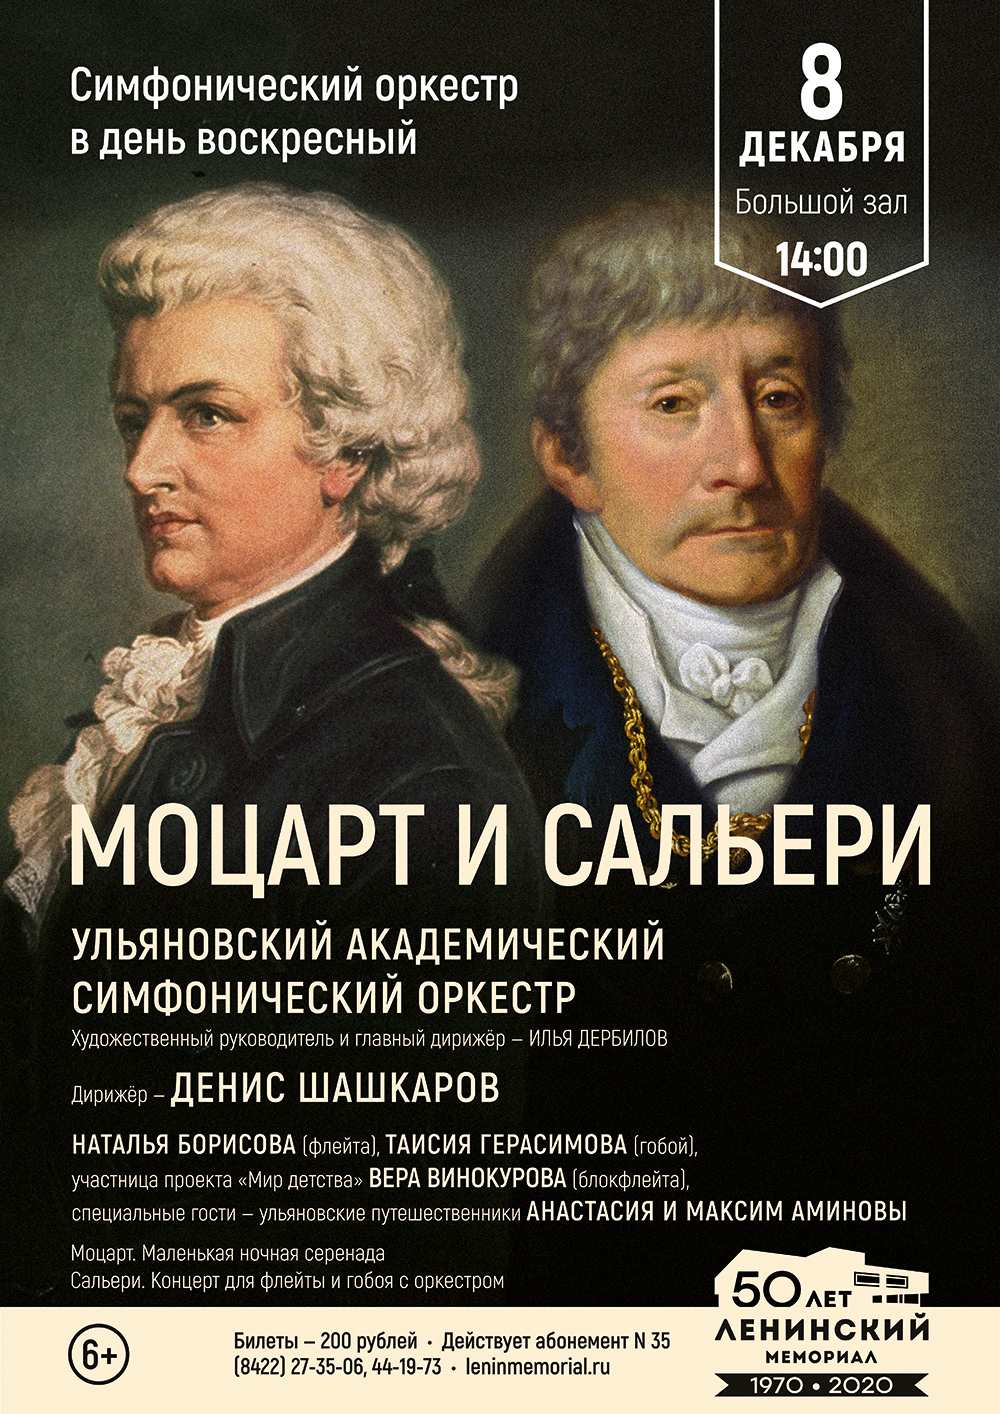 Моцарт сальери пушкин читать. Сальери и Моцарт книга Пушкина. Моцарт и Сальери друзья.